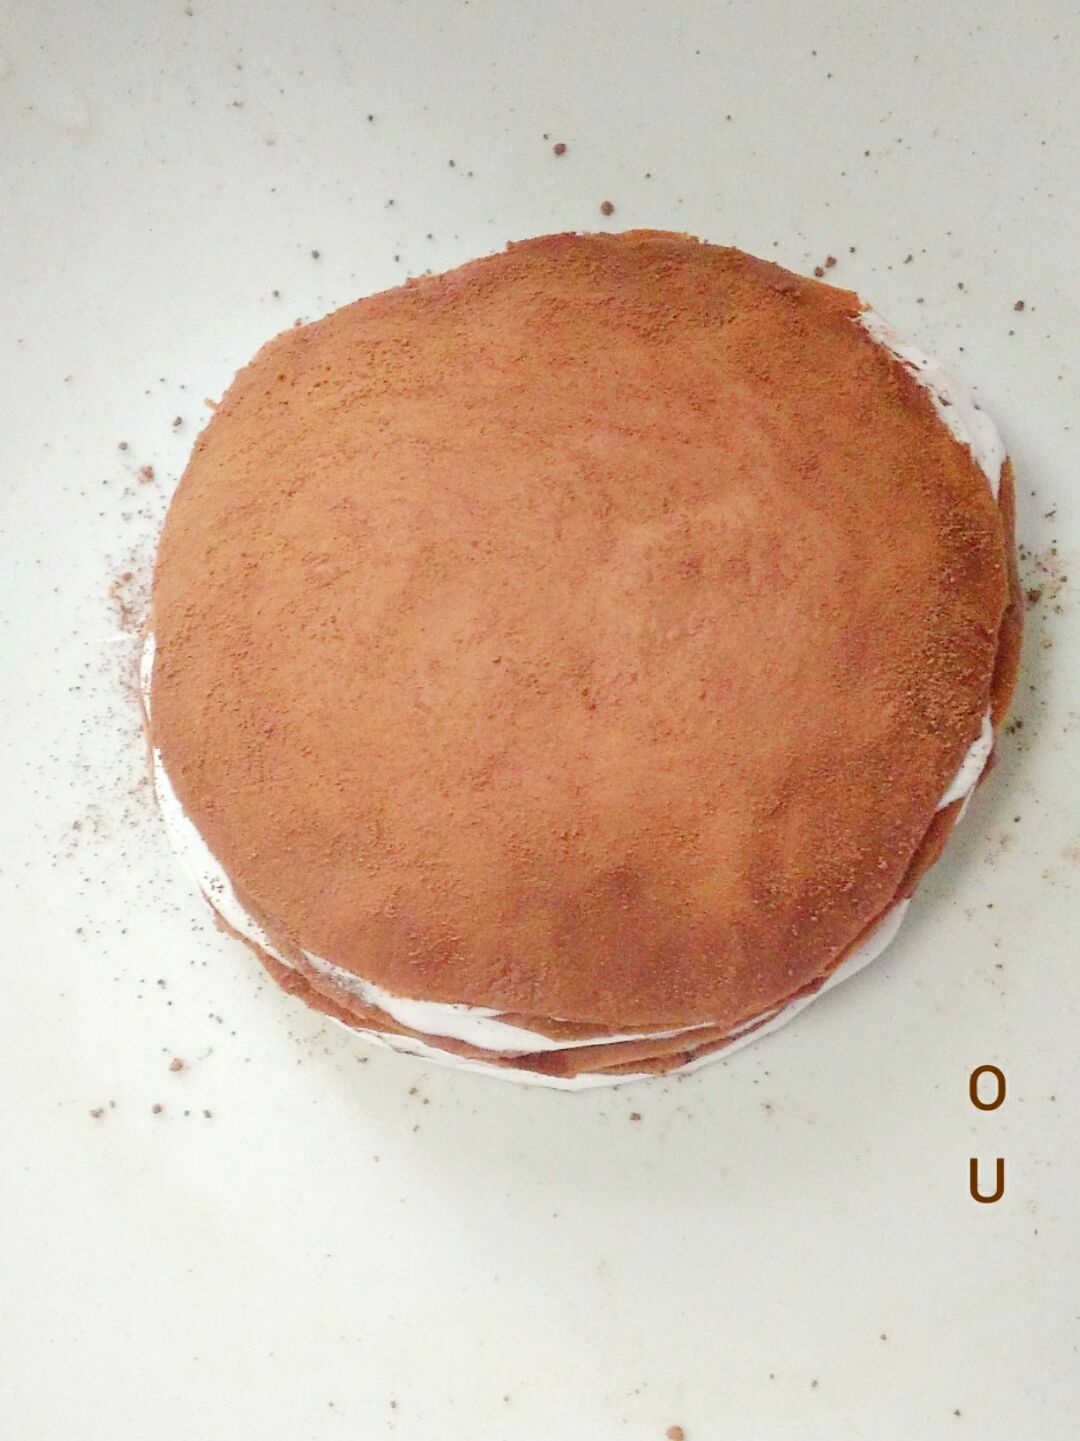 『OU』可可千层蛋糕 第18步